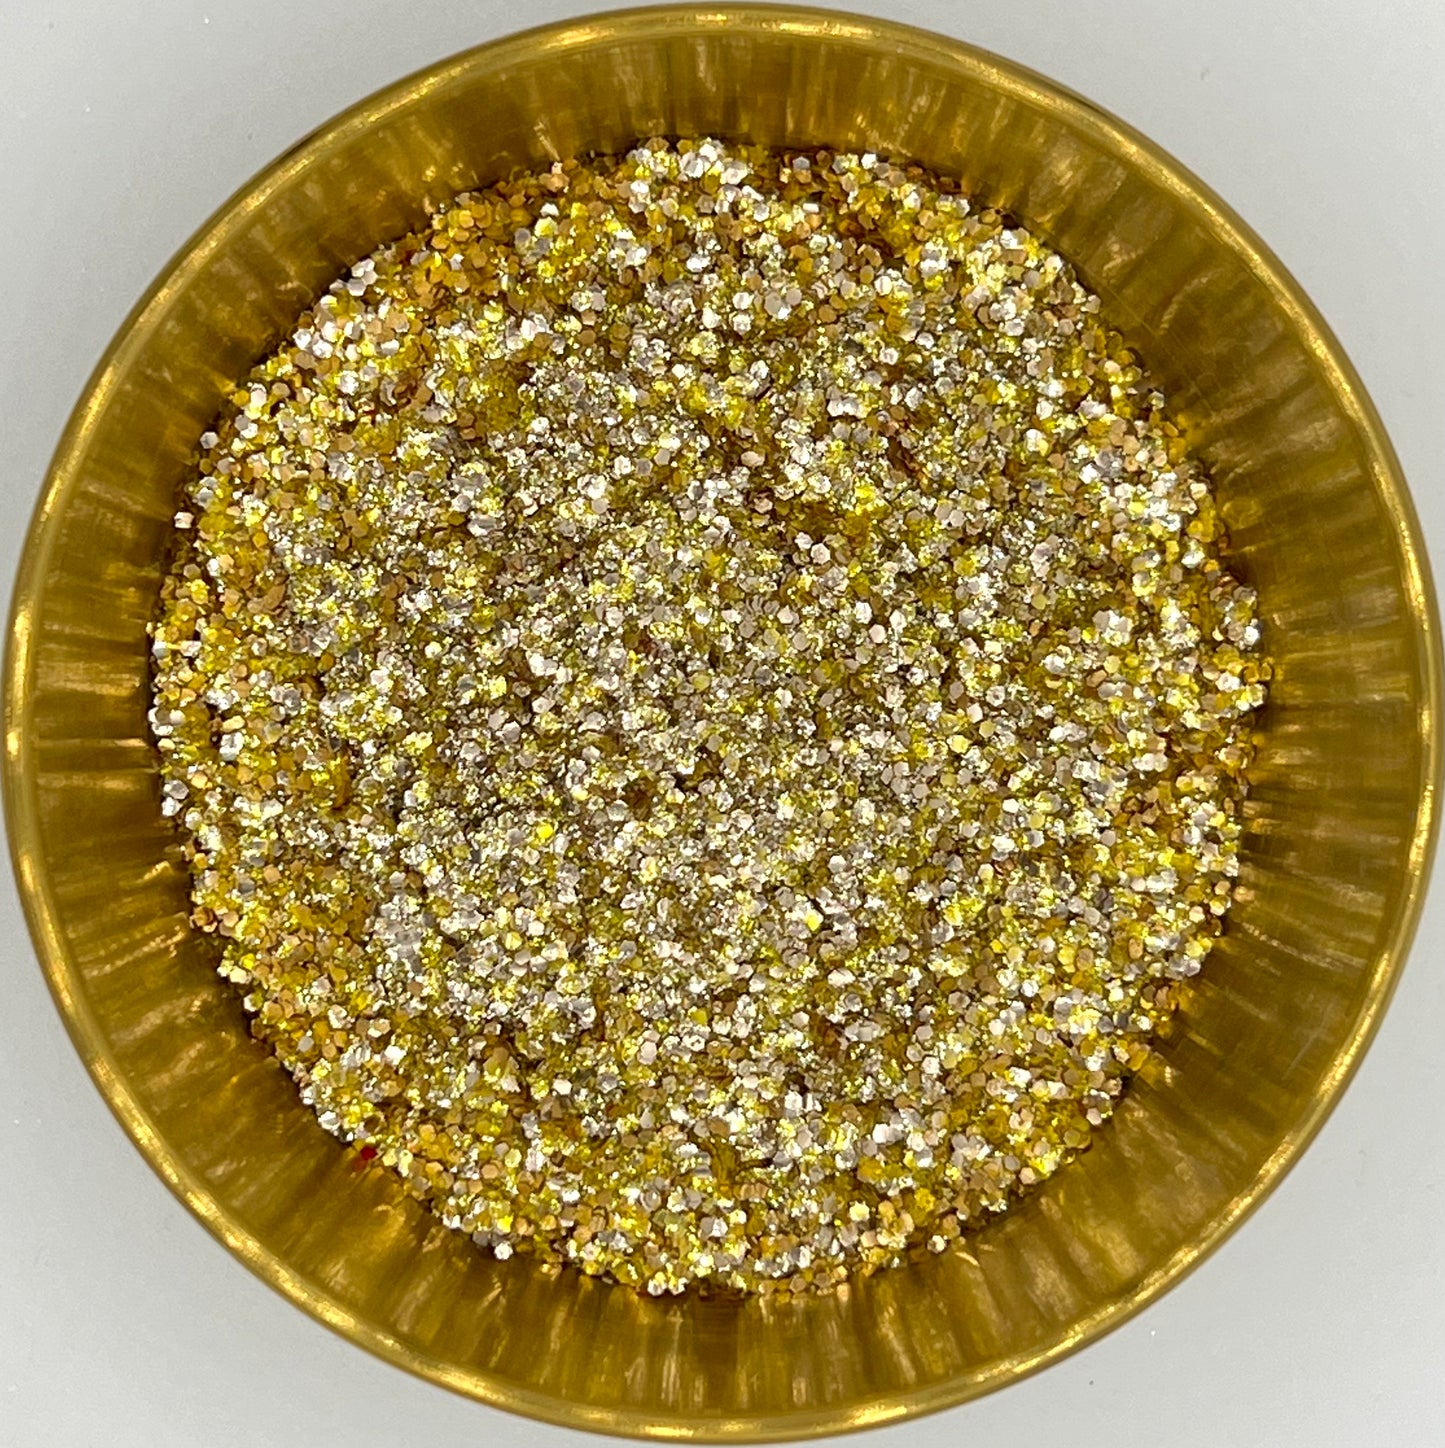 City Slickers Gold Biodegradable Glitter Mix